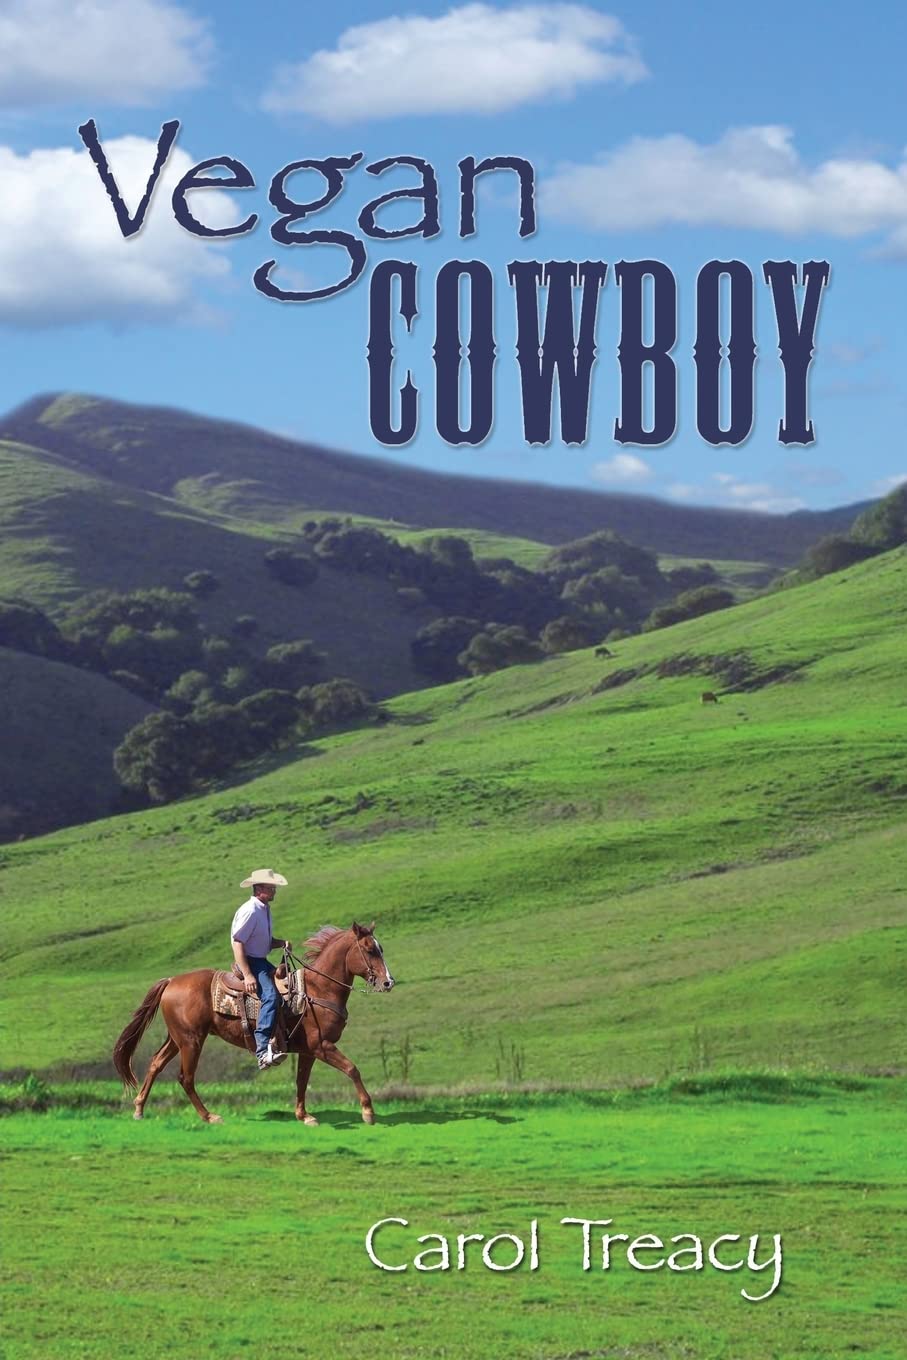 Carol Treacy: Vegan cowboy (2014)